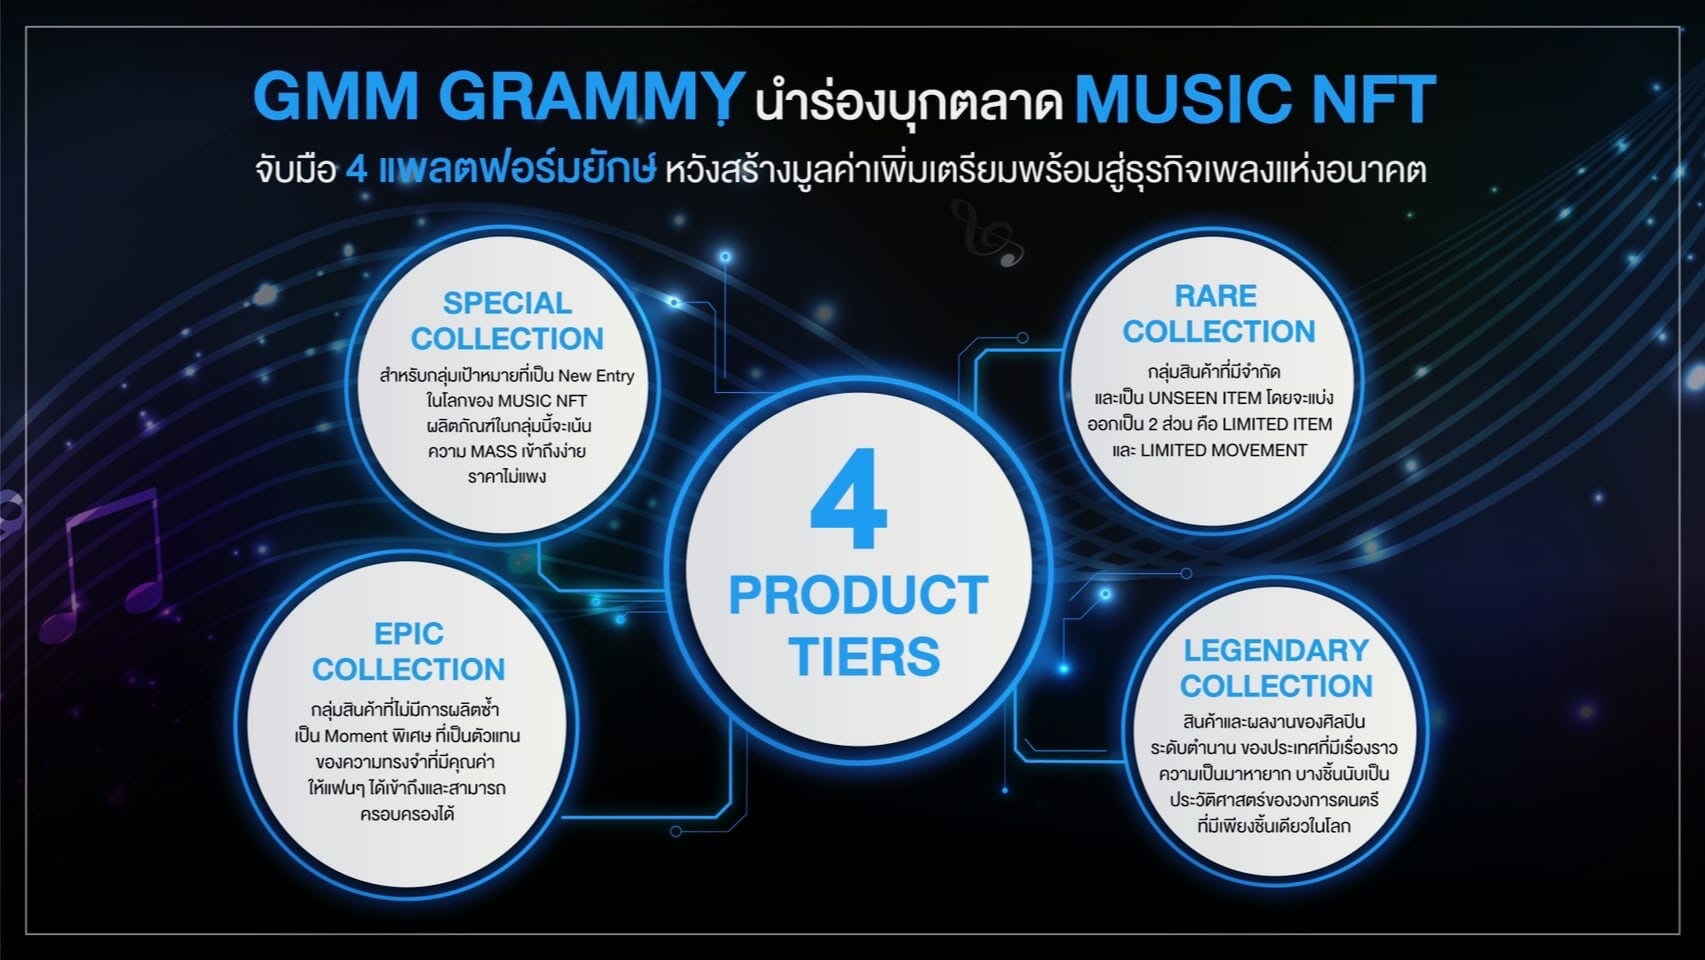 GMM Grammy นำร่องบุกตลาด MUSIC NFT จับมือ Bitkub, Coral, East NFT และ Zipmex 7